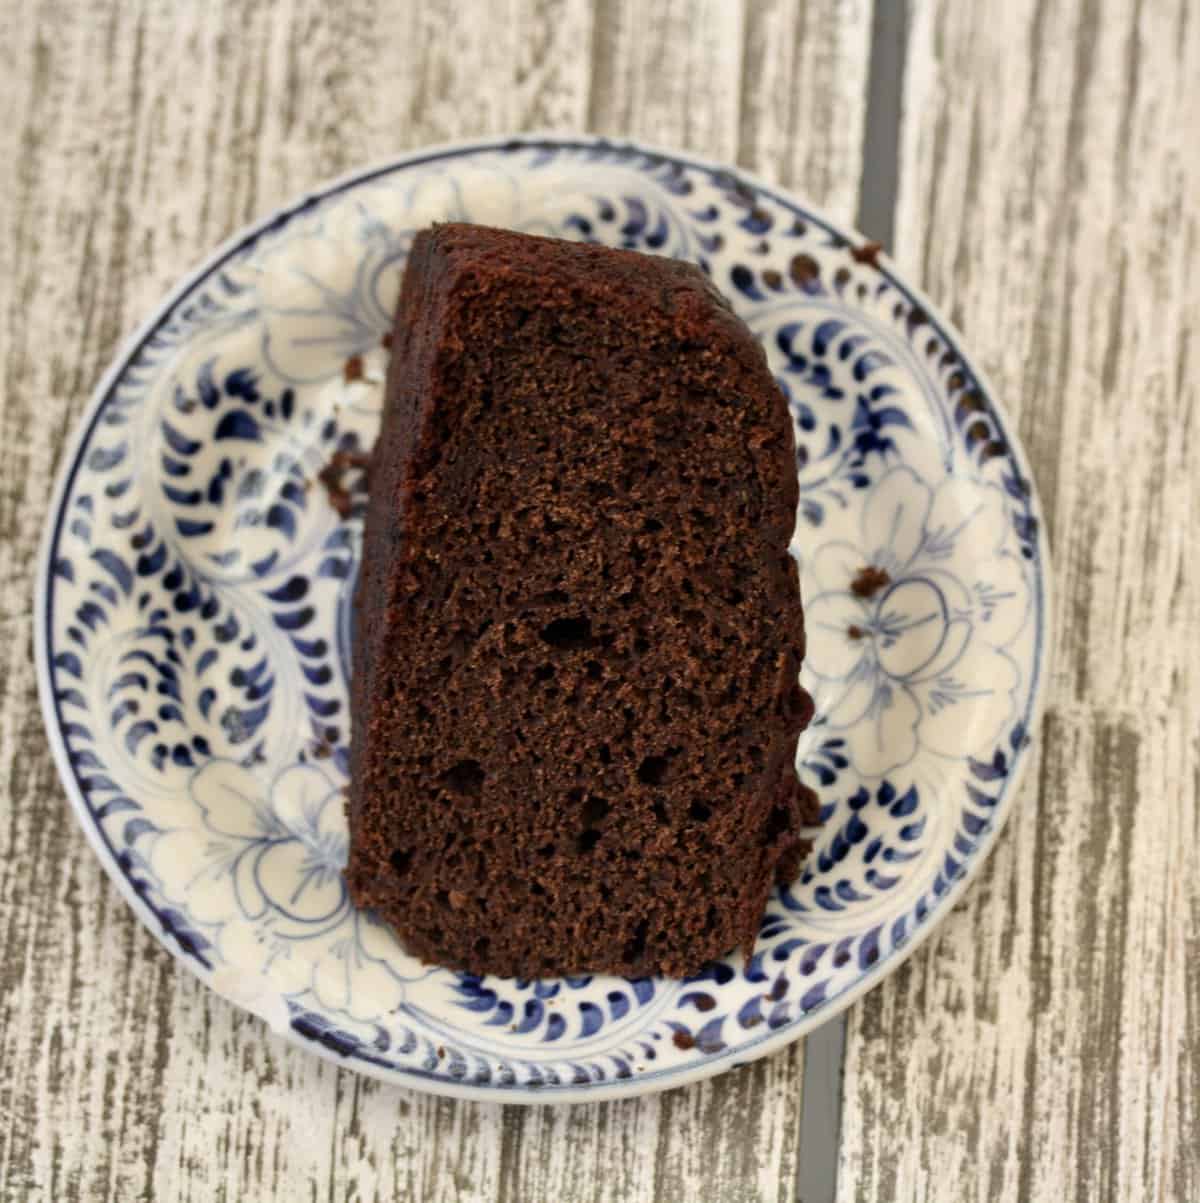 A slice of gluten-free chocolate zucchini cake on a plate.